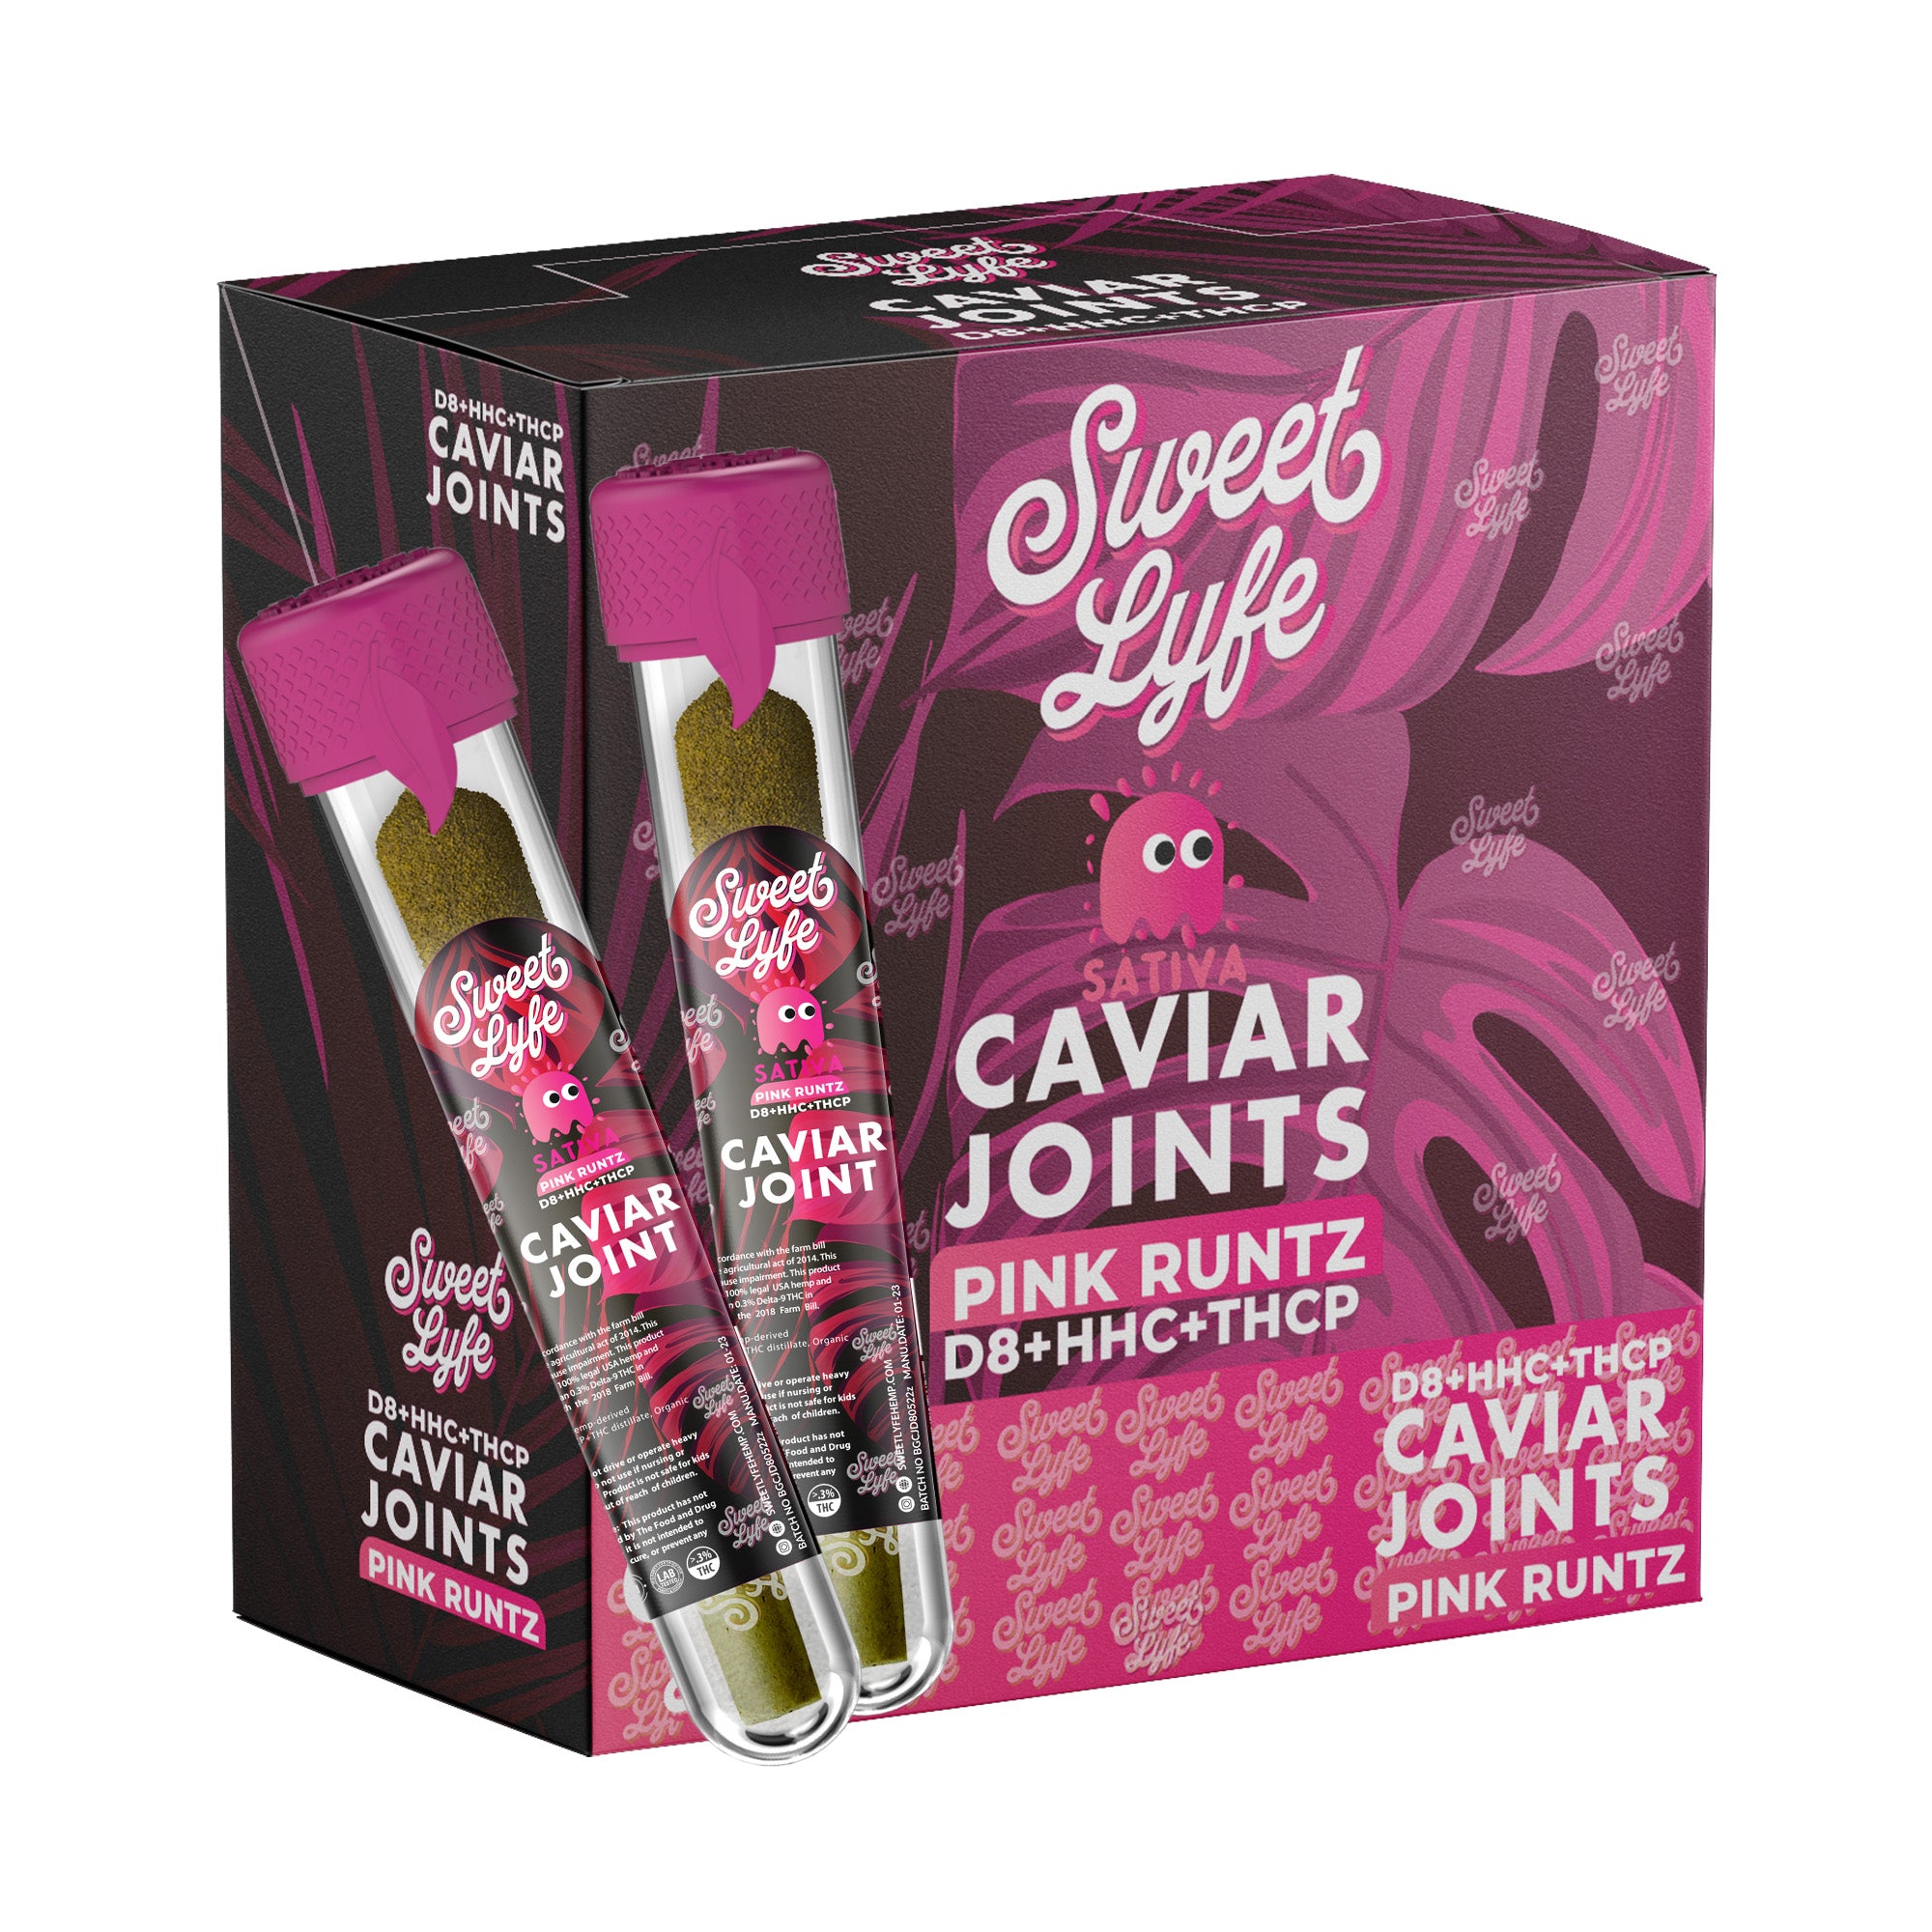 Caviar Joint D8+HHC+THCP - Pink Runtz - Sativa